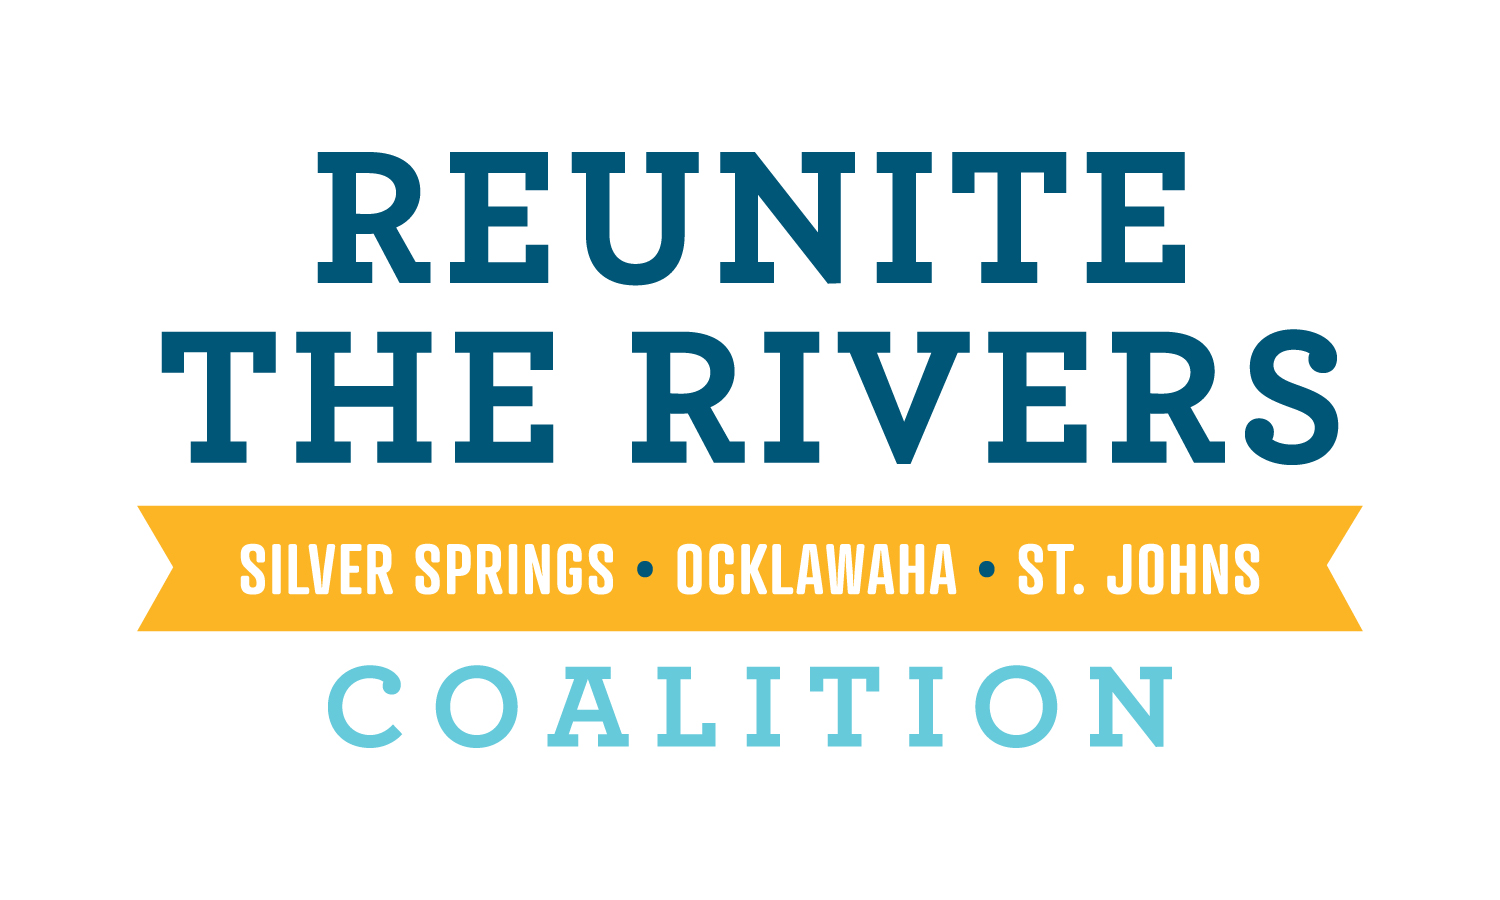 Reunite the Rivers